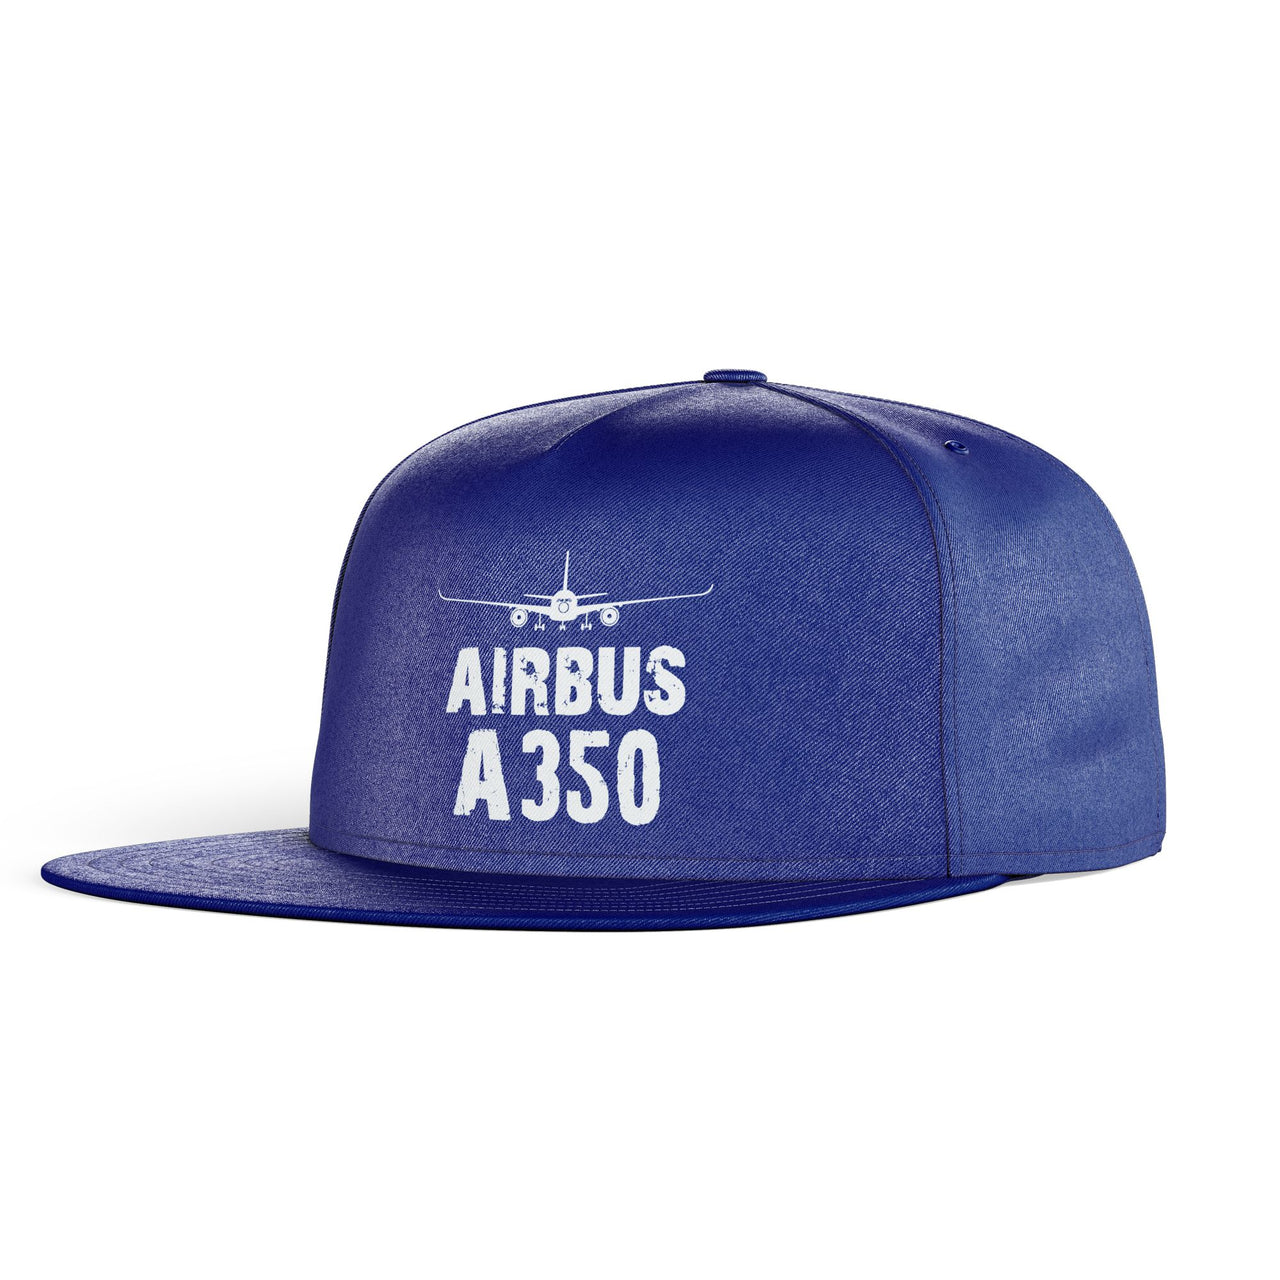 Airbus A350 & Plane Designed Snapback Caps & Hats